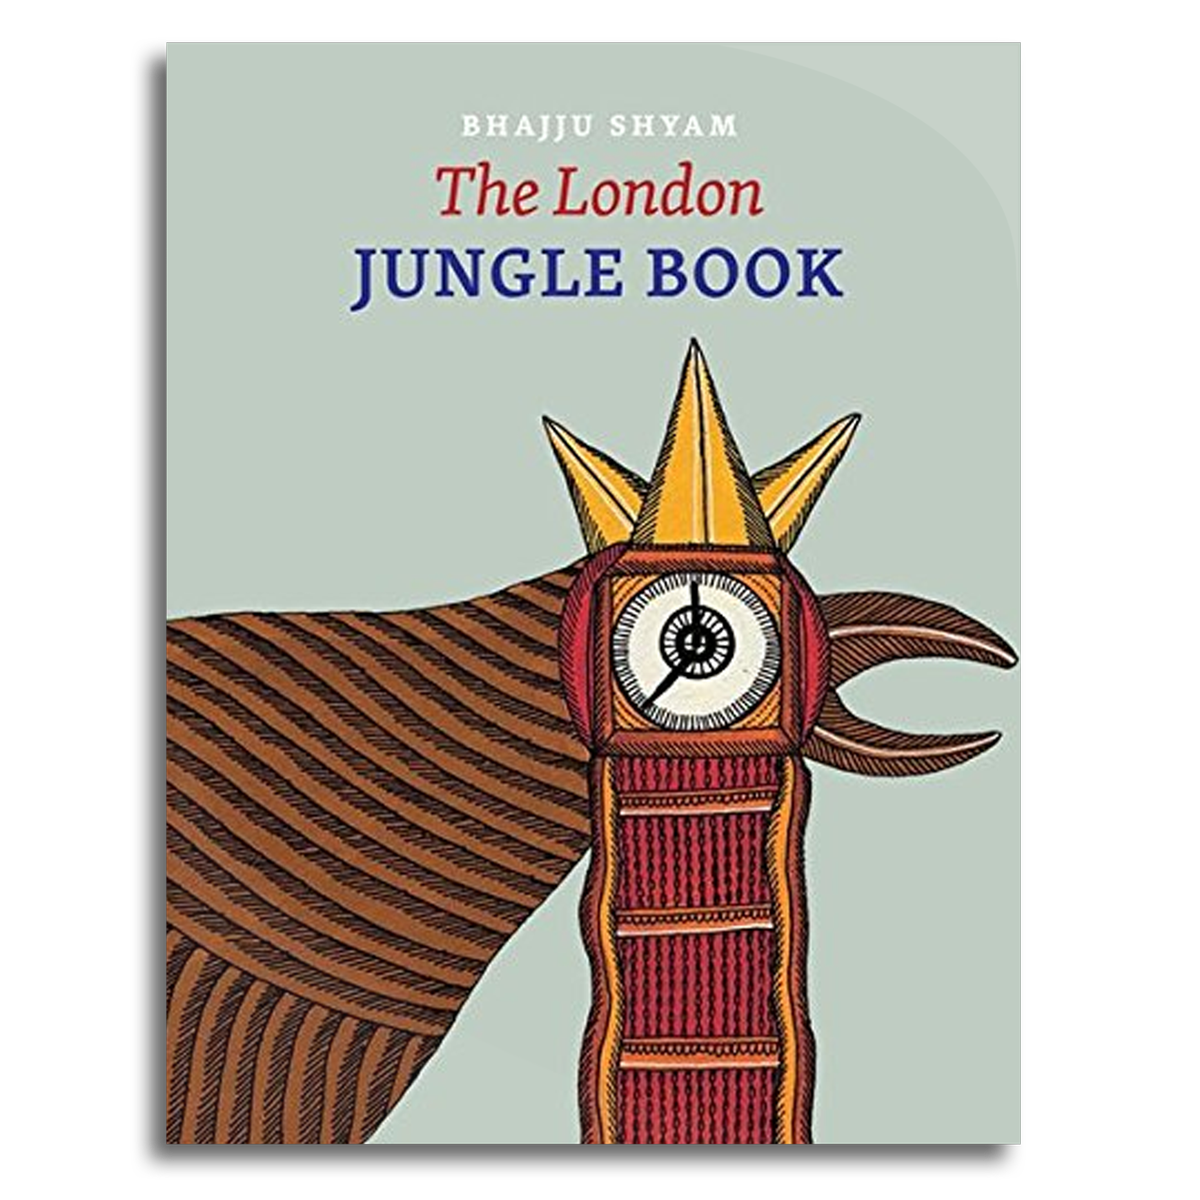 The London Jungle Book Bhajju Sham 英語版 本屋 Rewind リワインド Online Store 東京 自由が丘